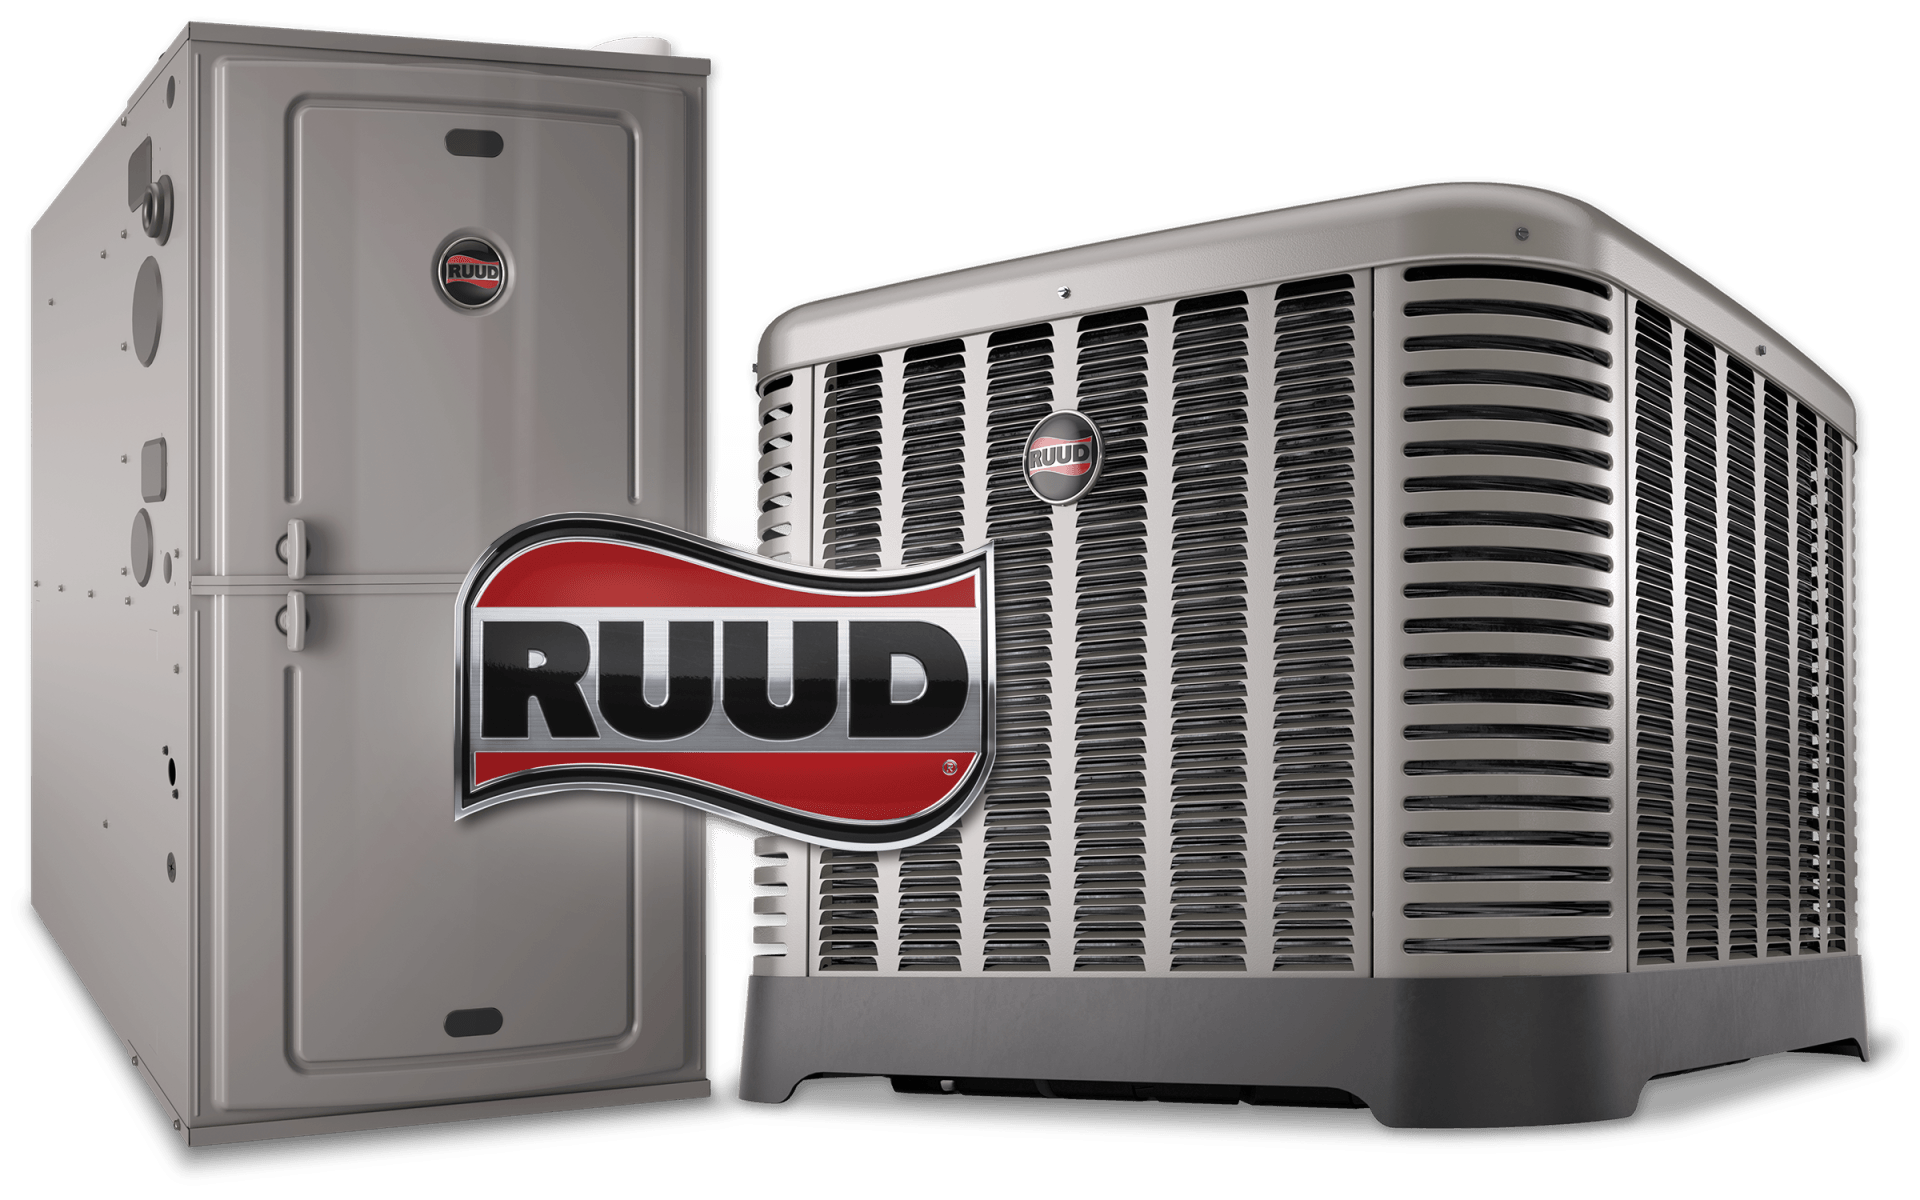 RUUD HVAC system with RUUD logo